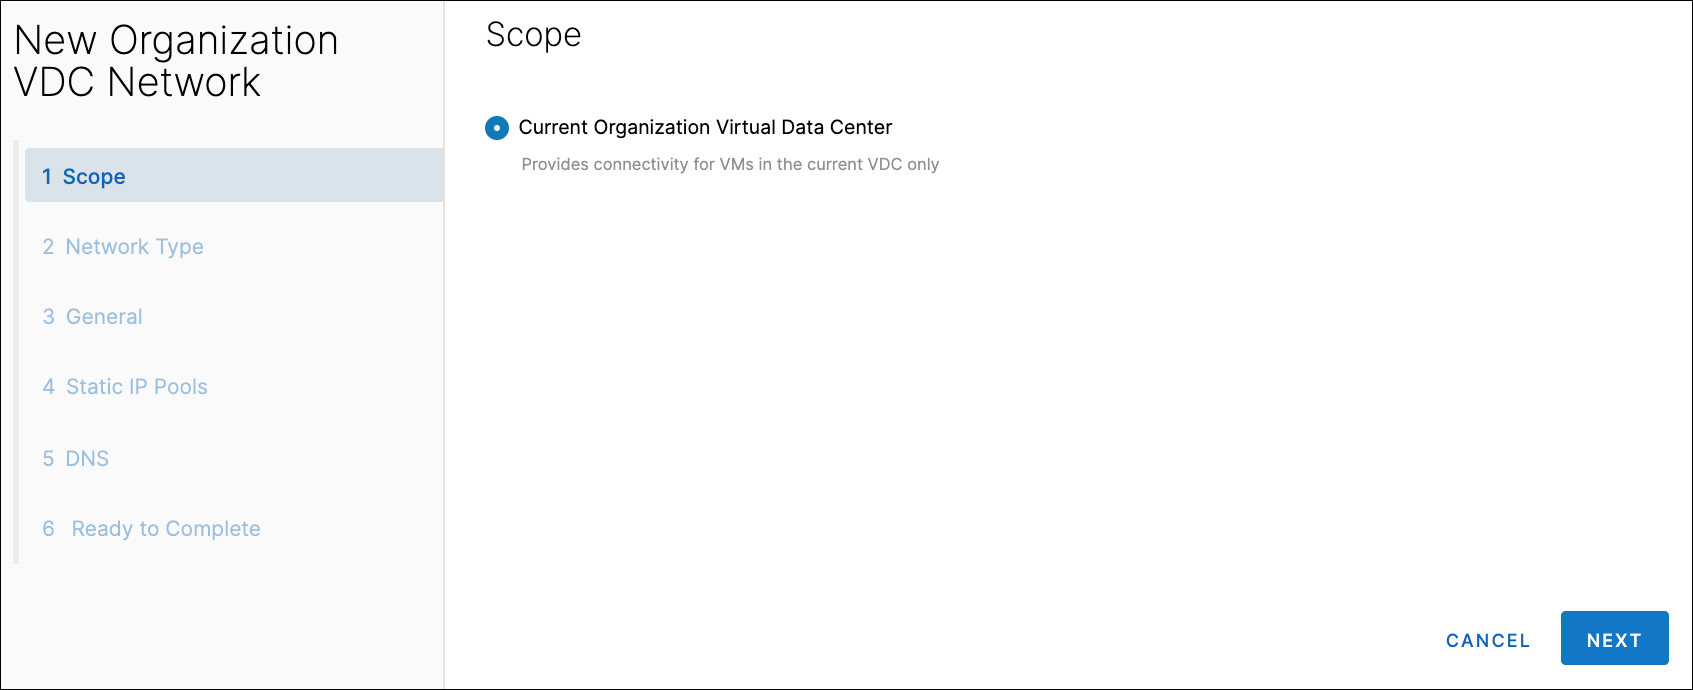 New Organization VDC Network: Scope